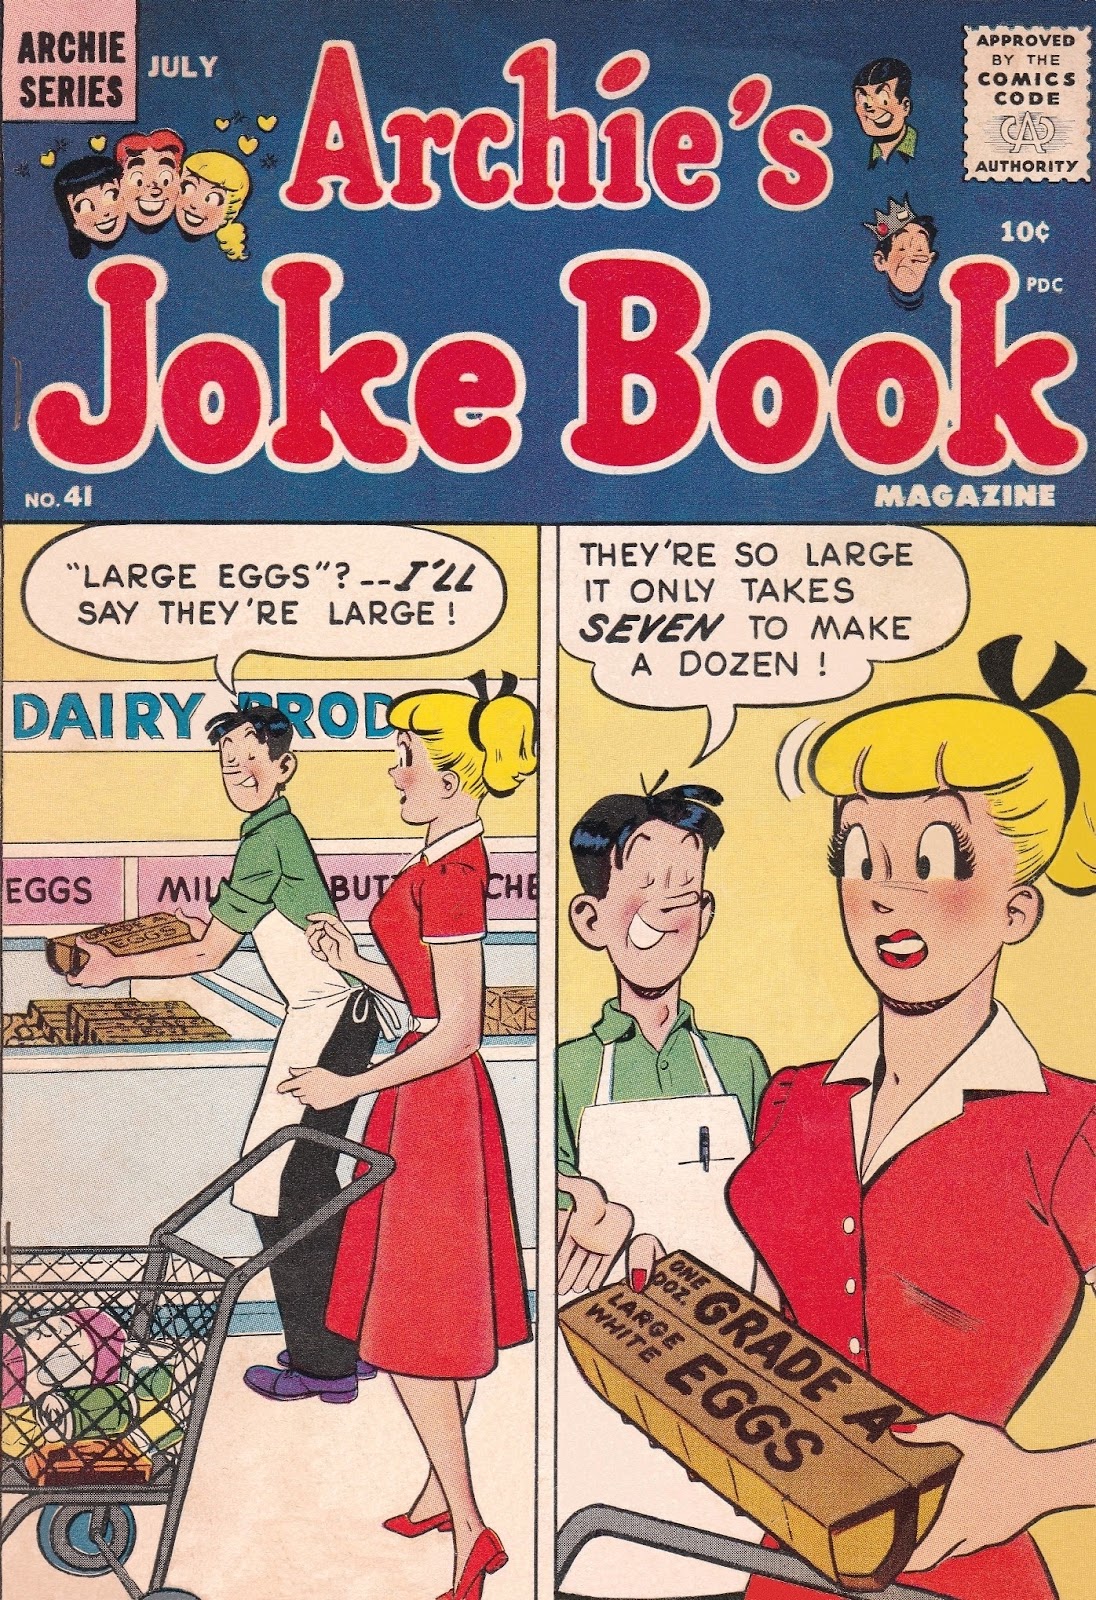 Archie's Joke Book Magazine issue 41 - Page 1